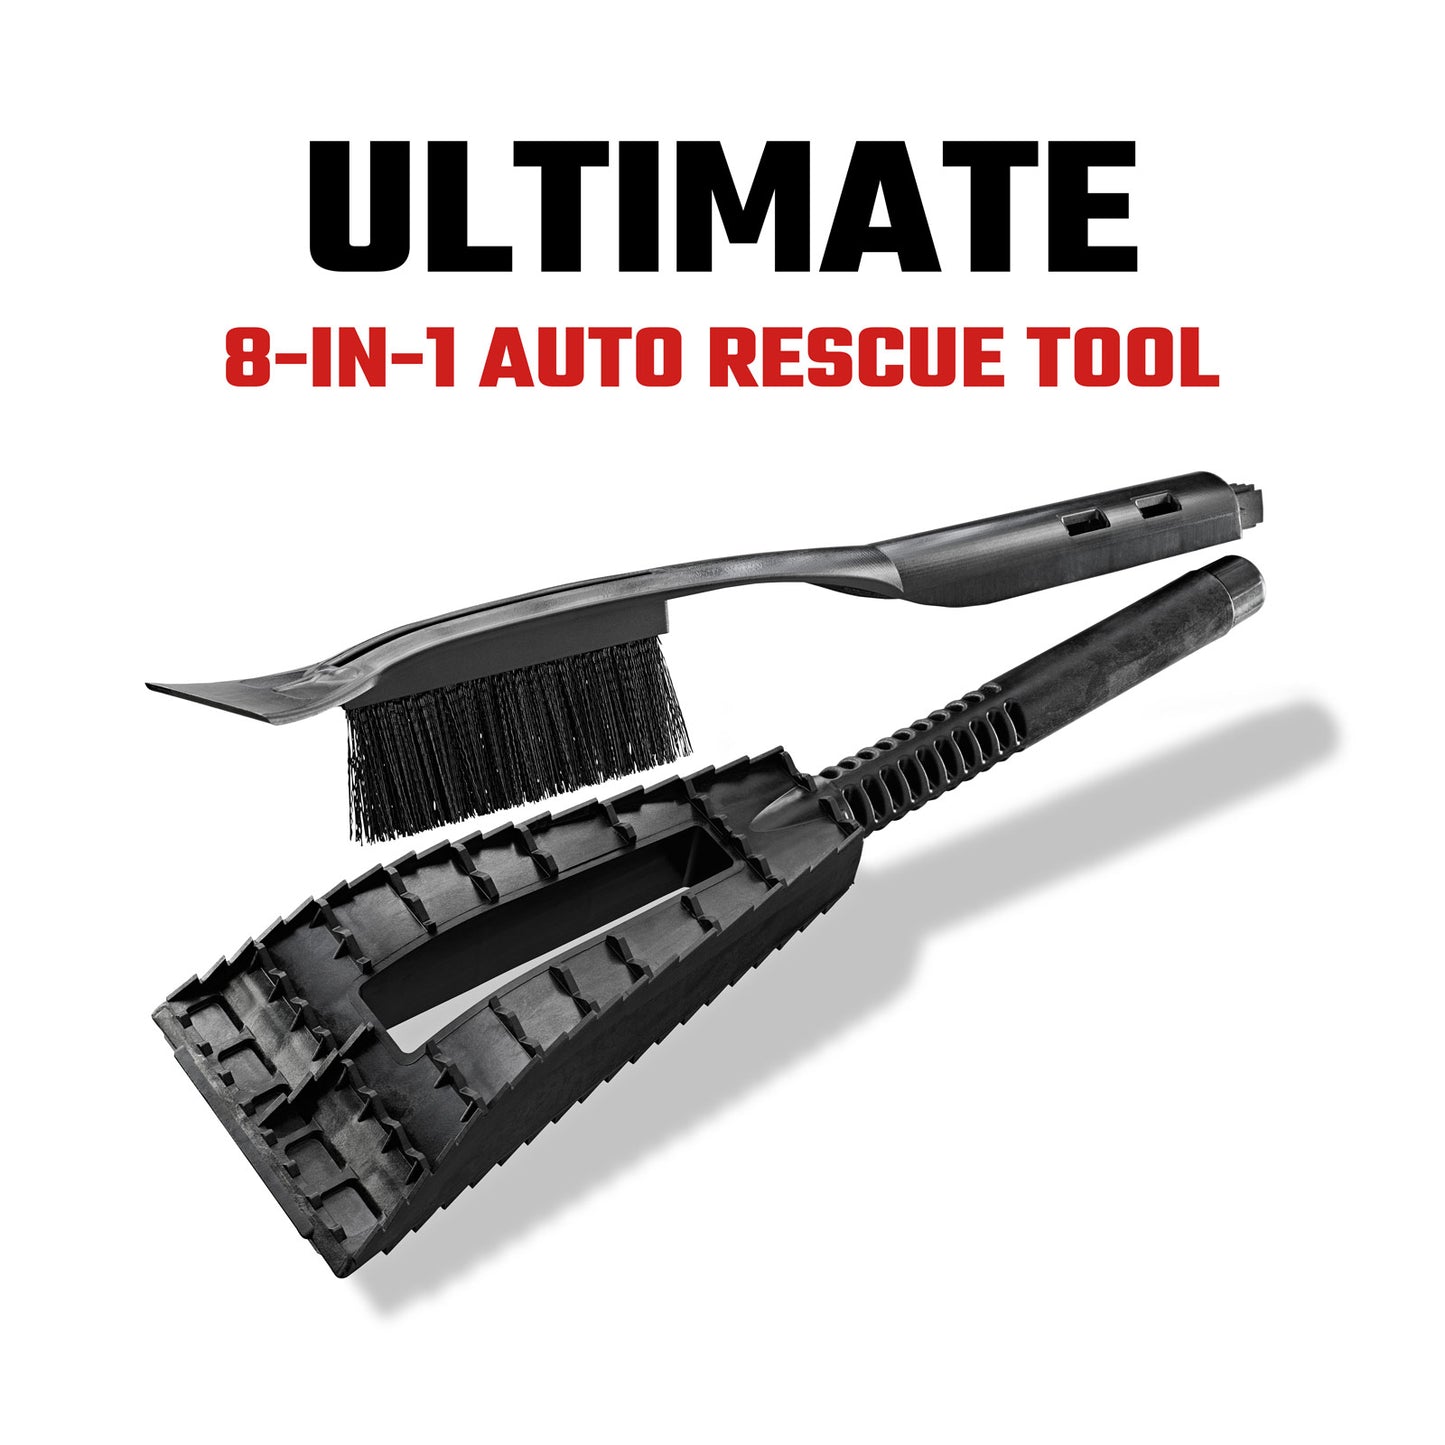 Ultimate 8-in-1 Auto Rescue Tool